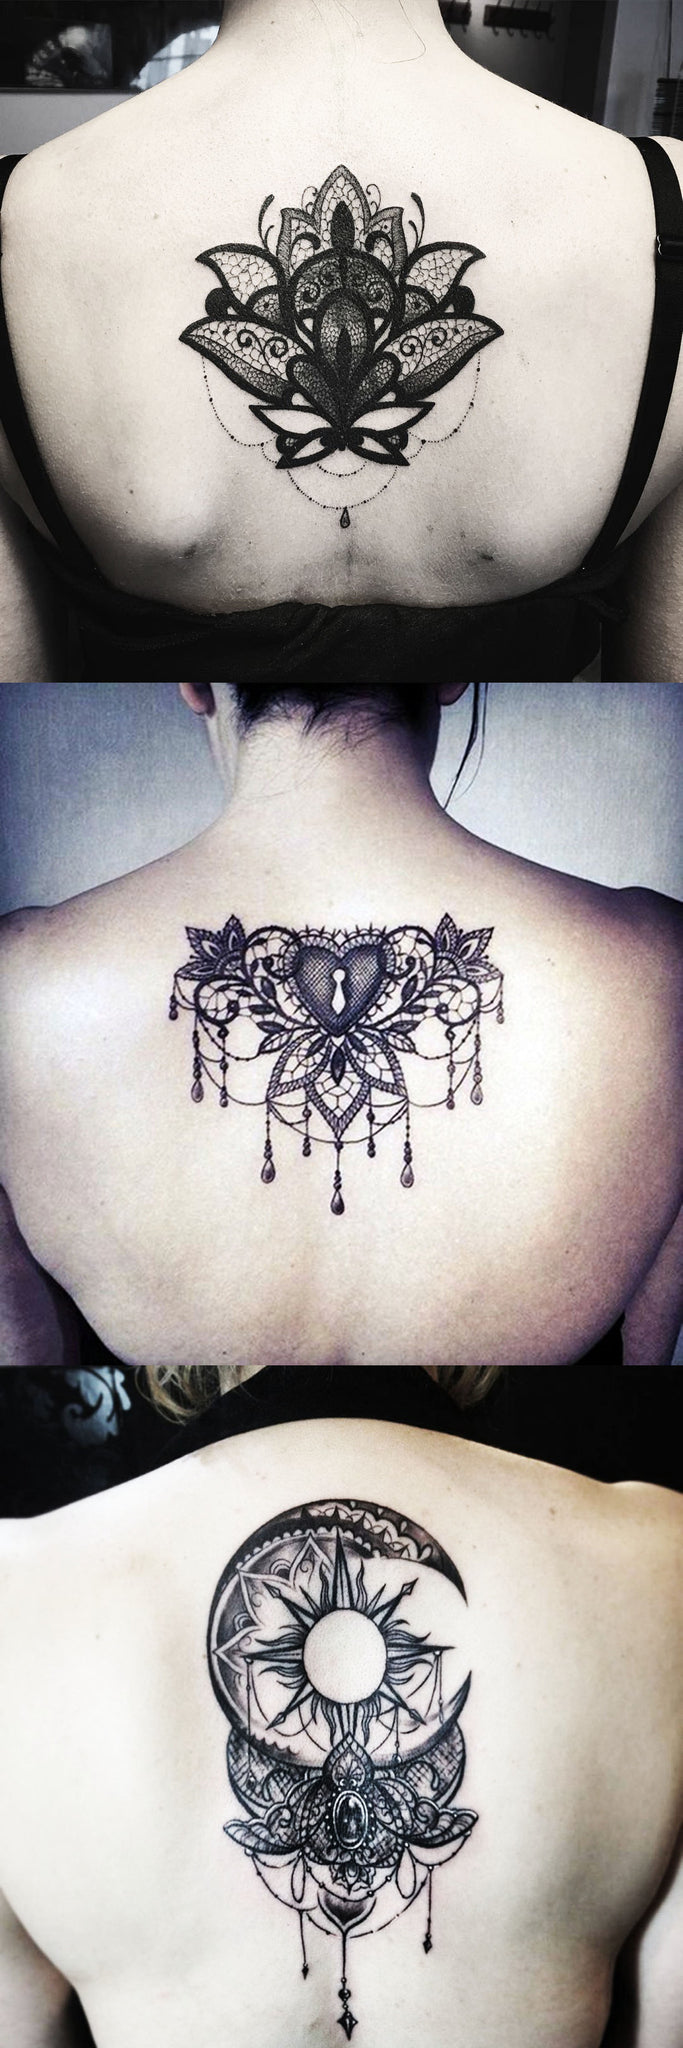 Lace Tattoos Ideas for Women - Spine Back Lotus Tat - Sun Moon Chandelier Black Henna at MyBodiArt.com